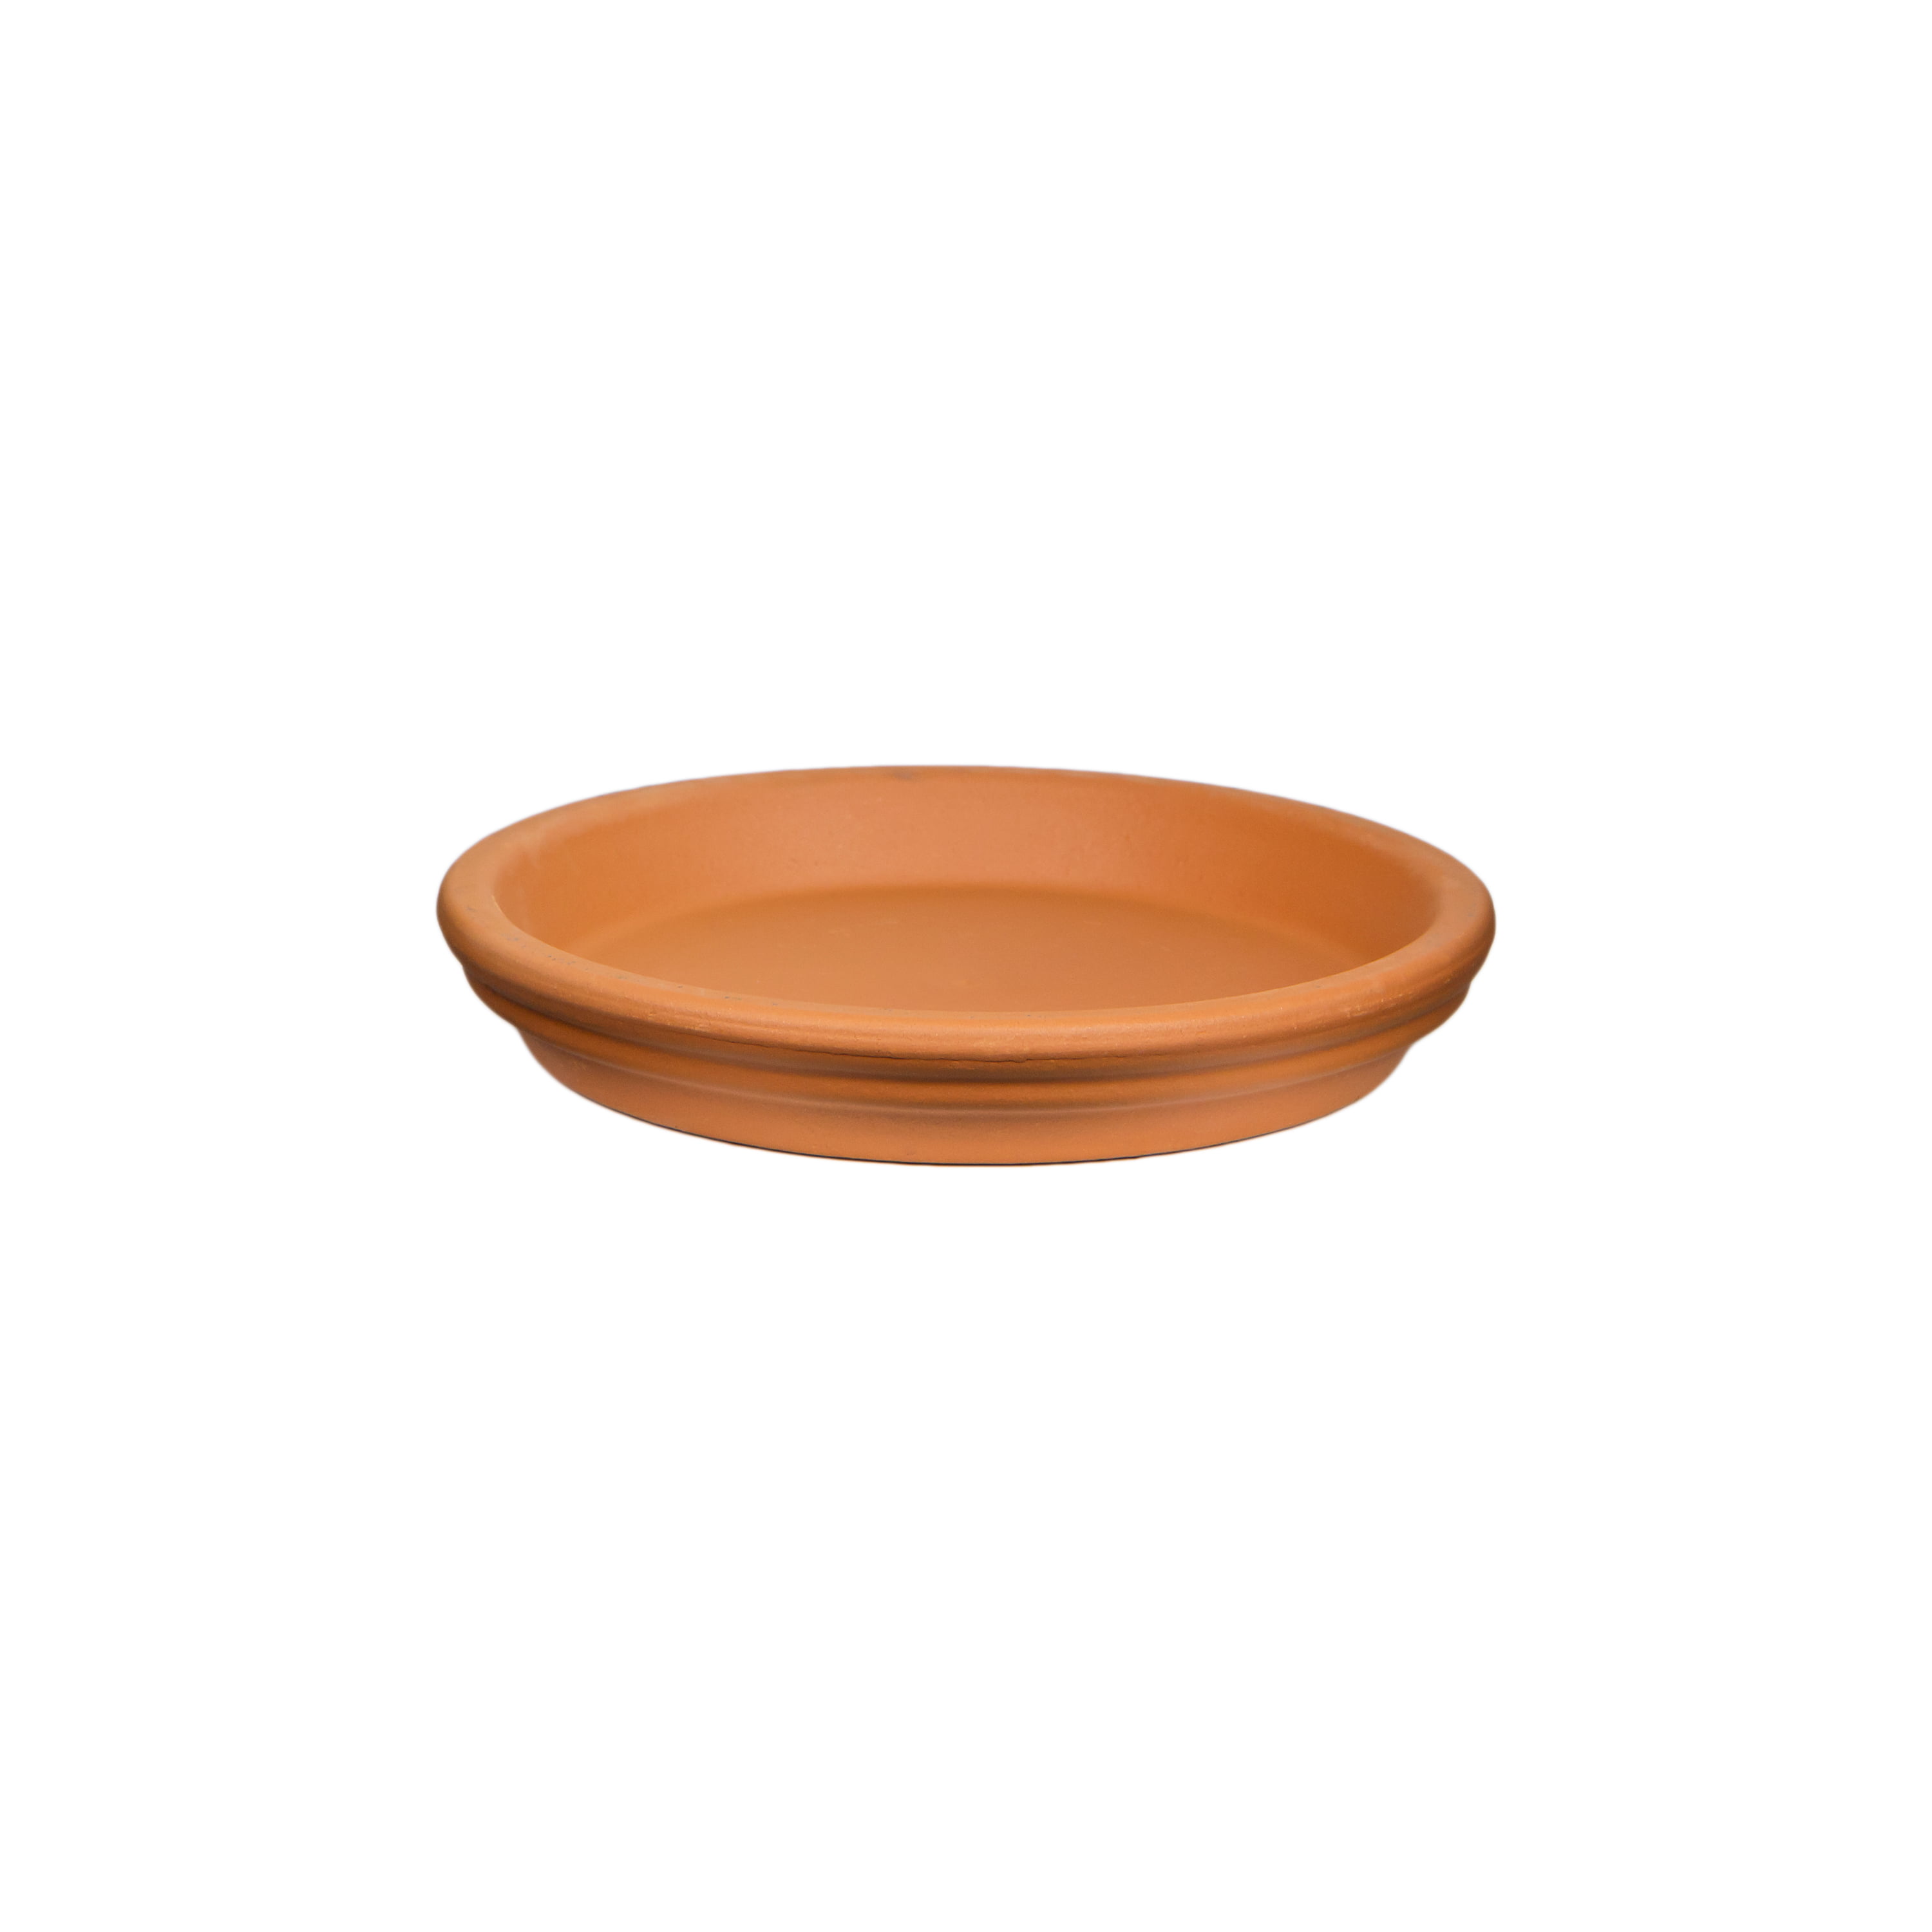 Pennington 8" Terra Cotta Clay Standard Saucer for Pot or Planter.